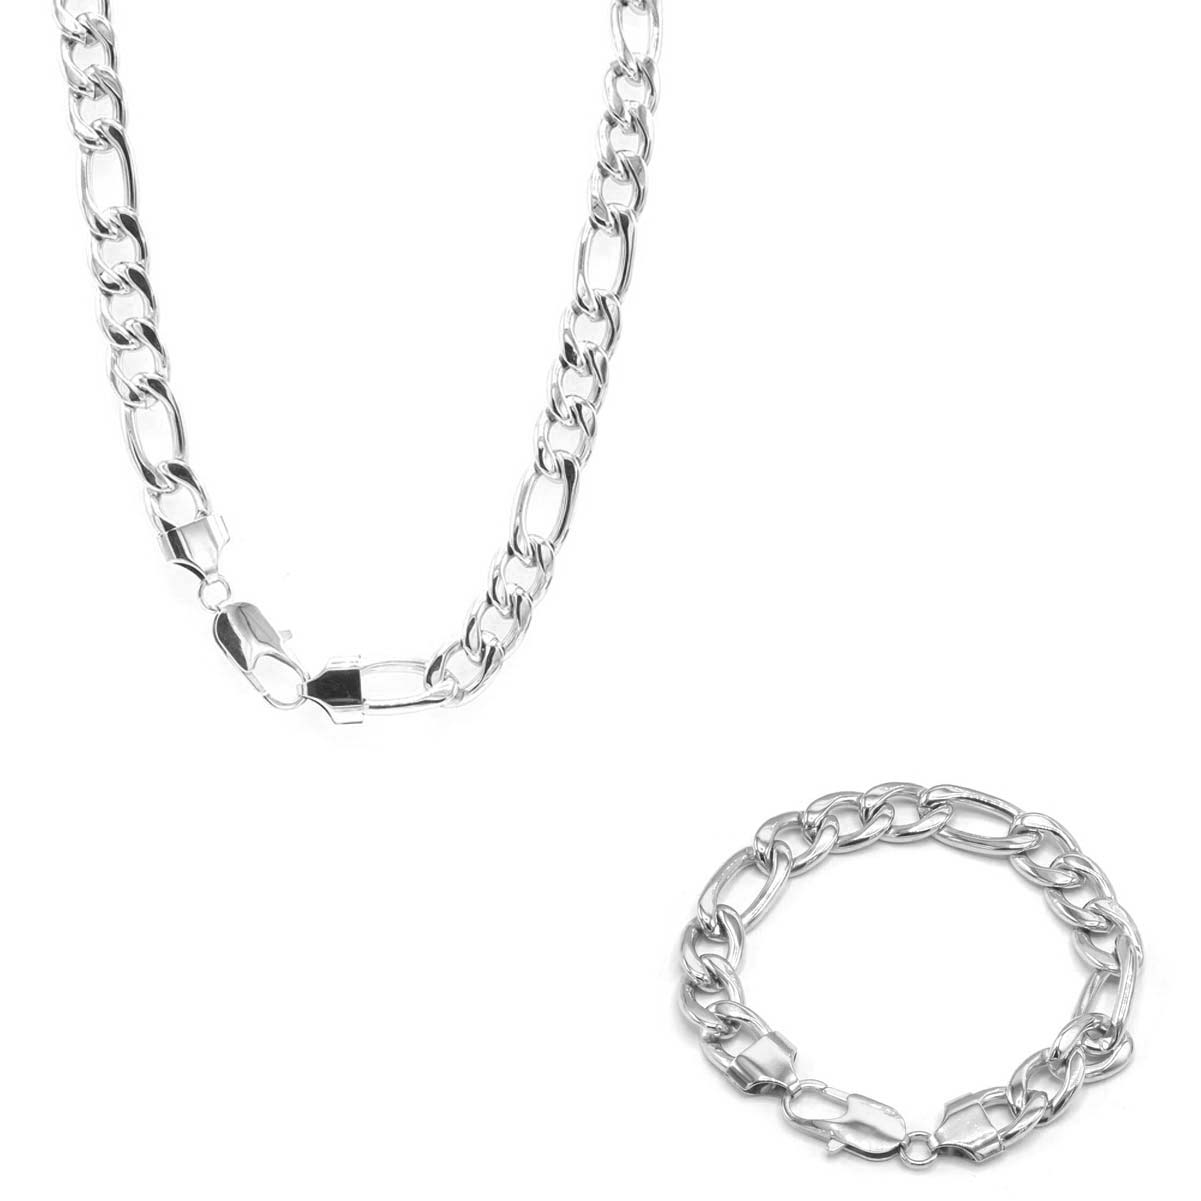 Stainless Steel Chain Bracelet Figaro Set 10mm 24 inch chain 8.5 inch bracelet